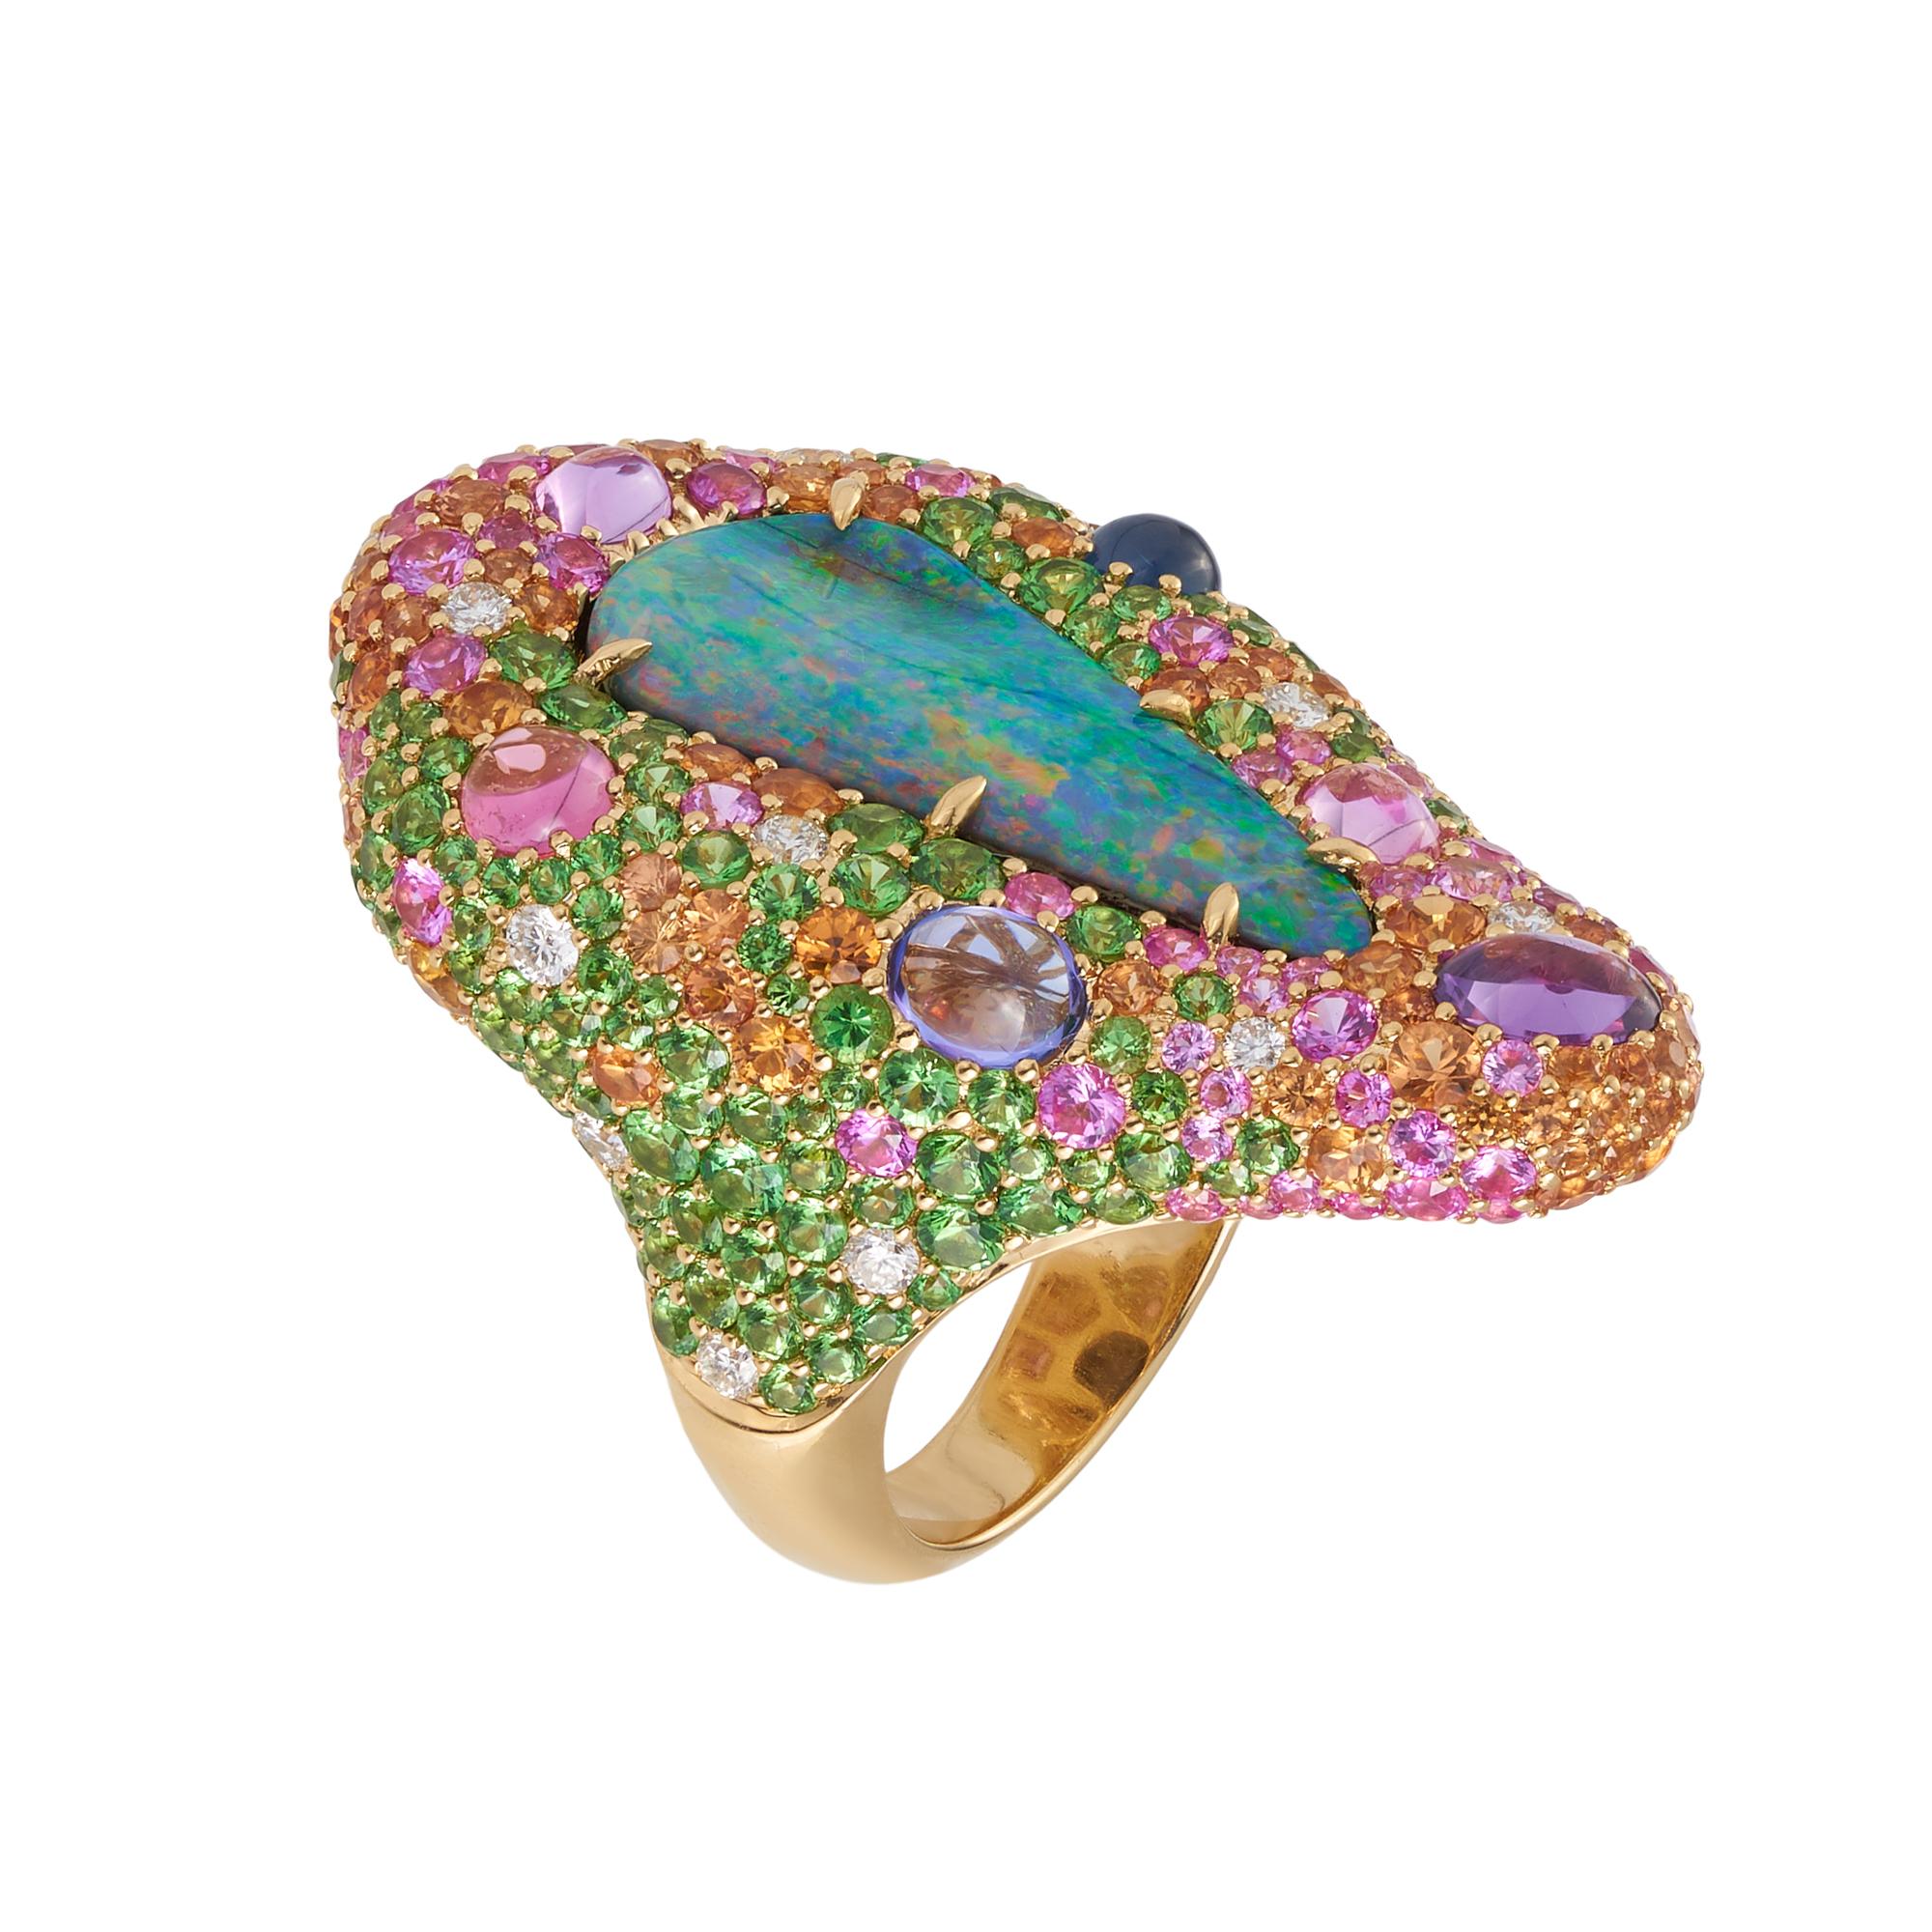 Women's Margot McKinney 18 Karat Yellow Gold Ring with Opal, Tsavorite and Pink Sapphire